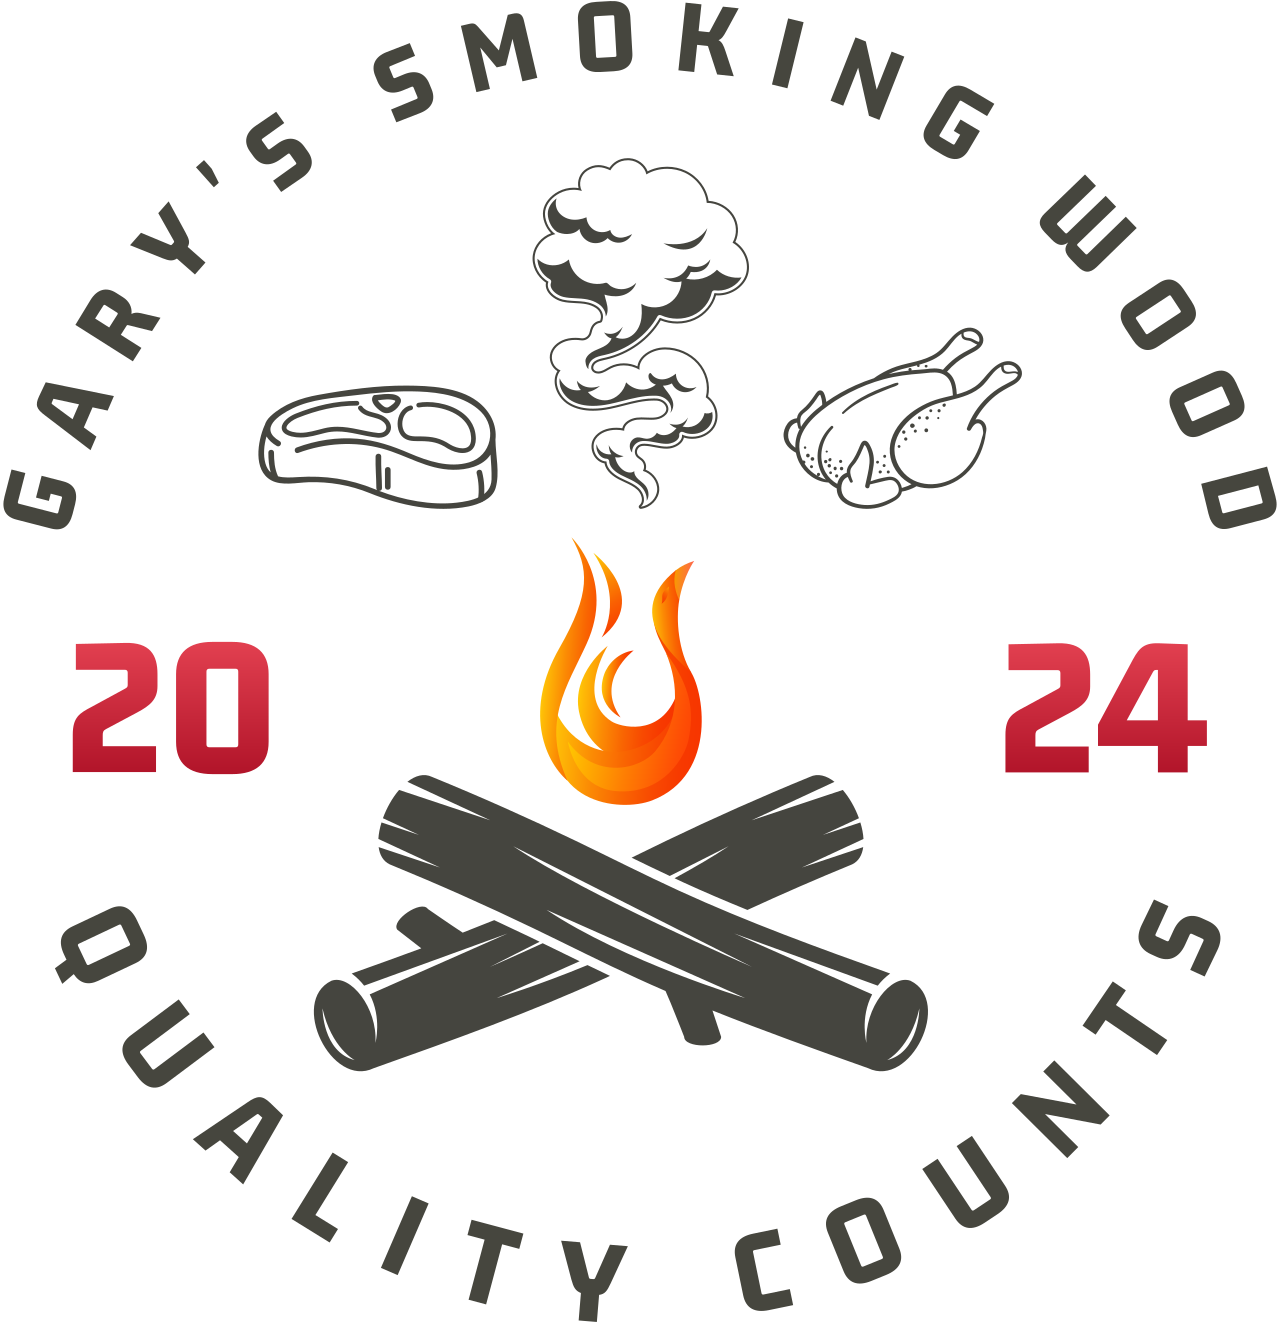 Gary's smoking wood's logo